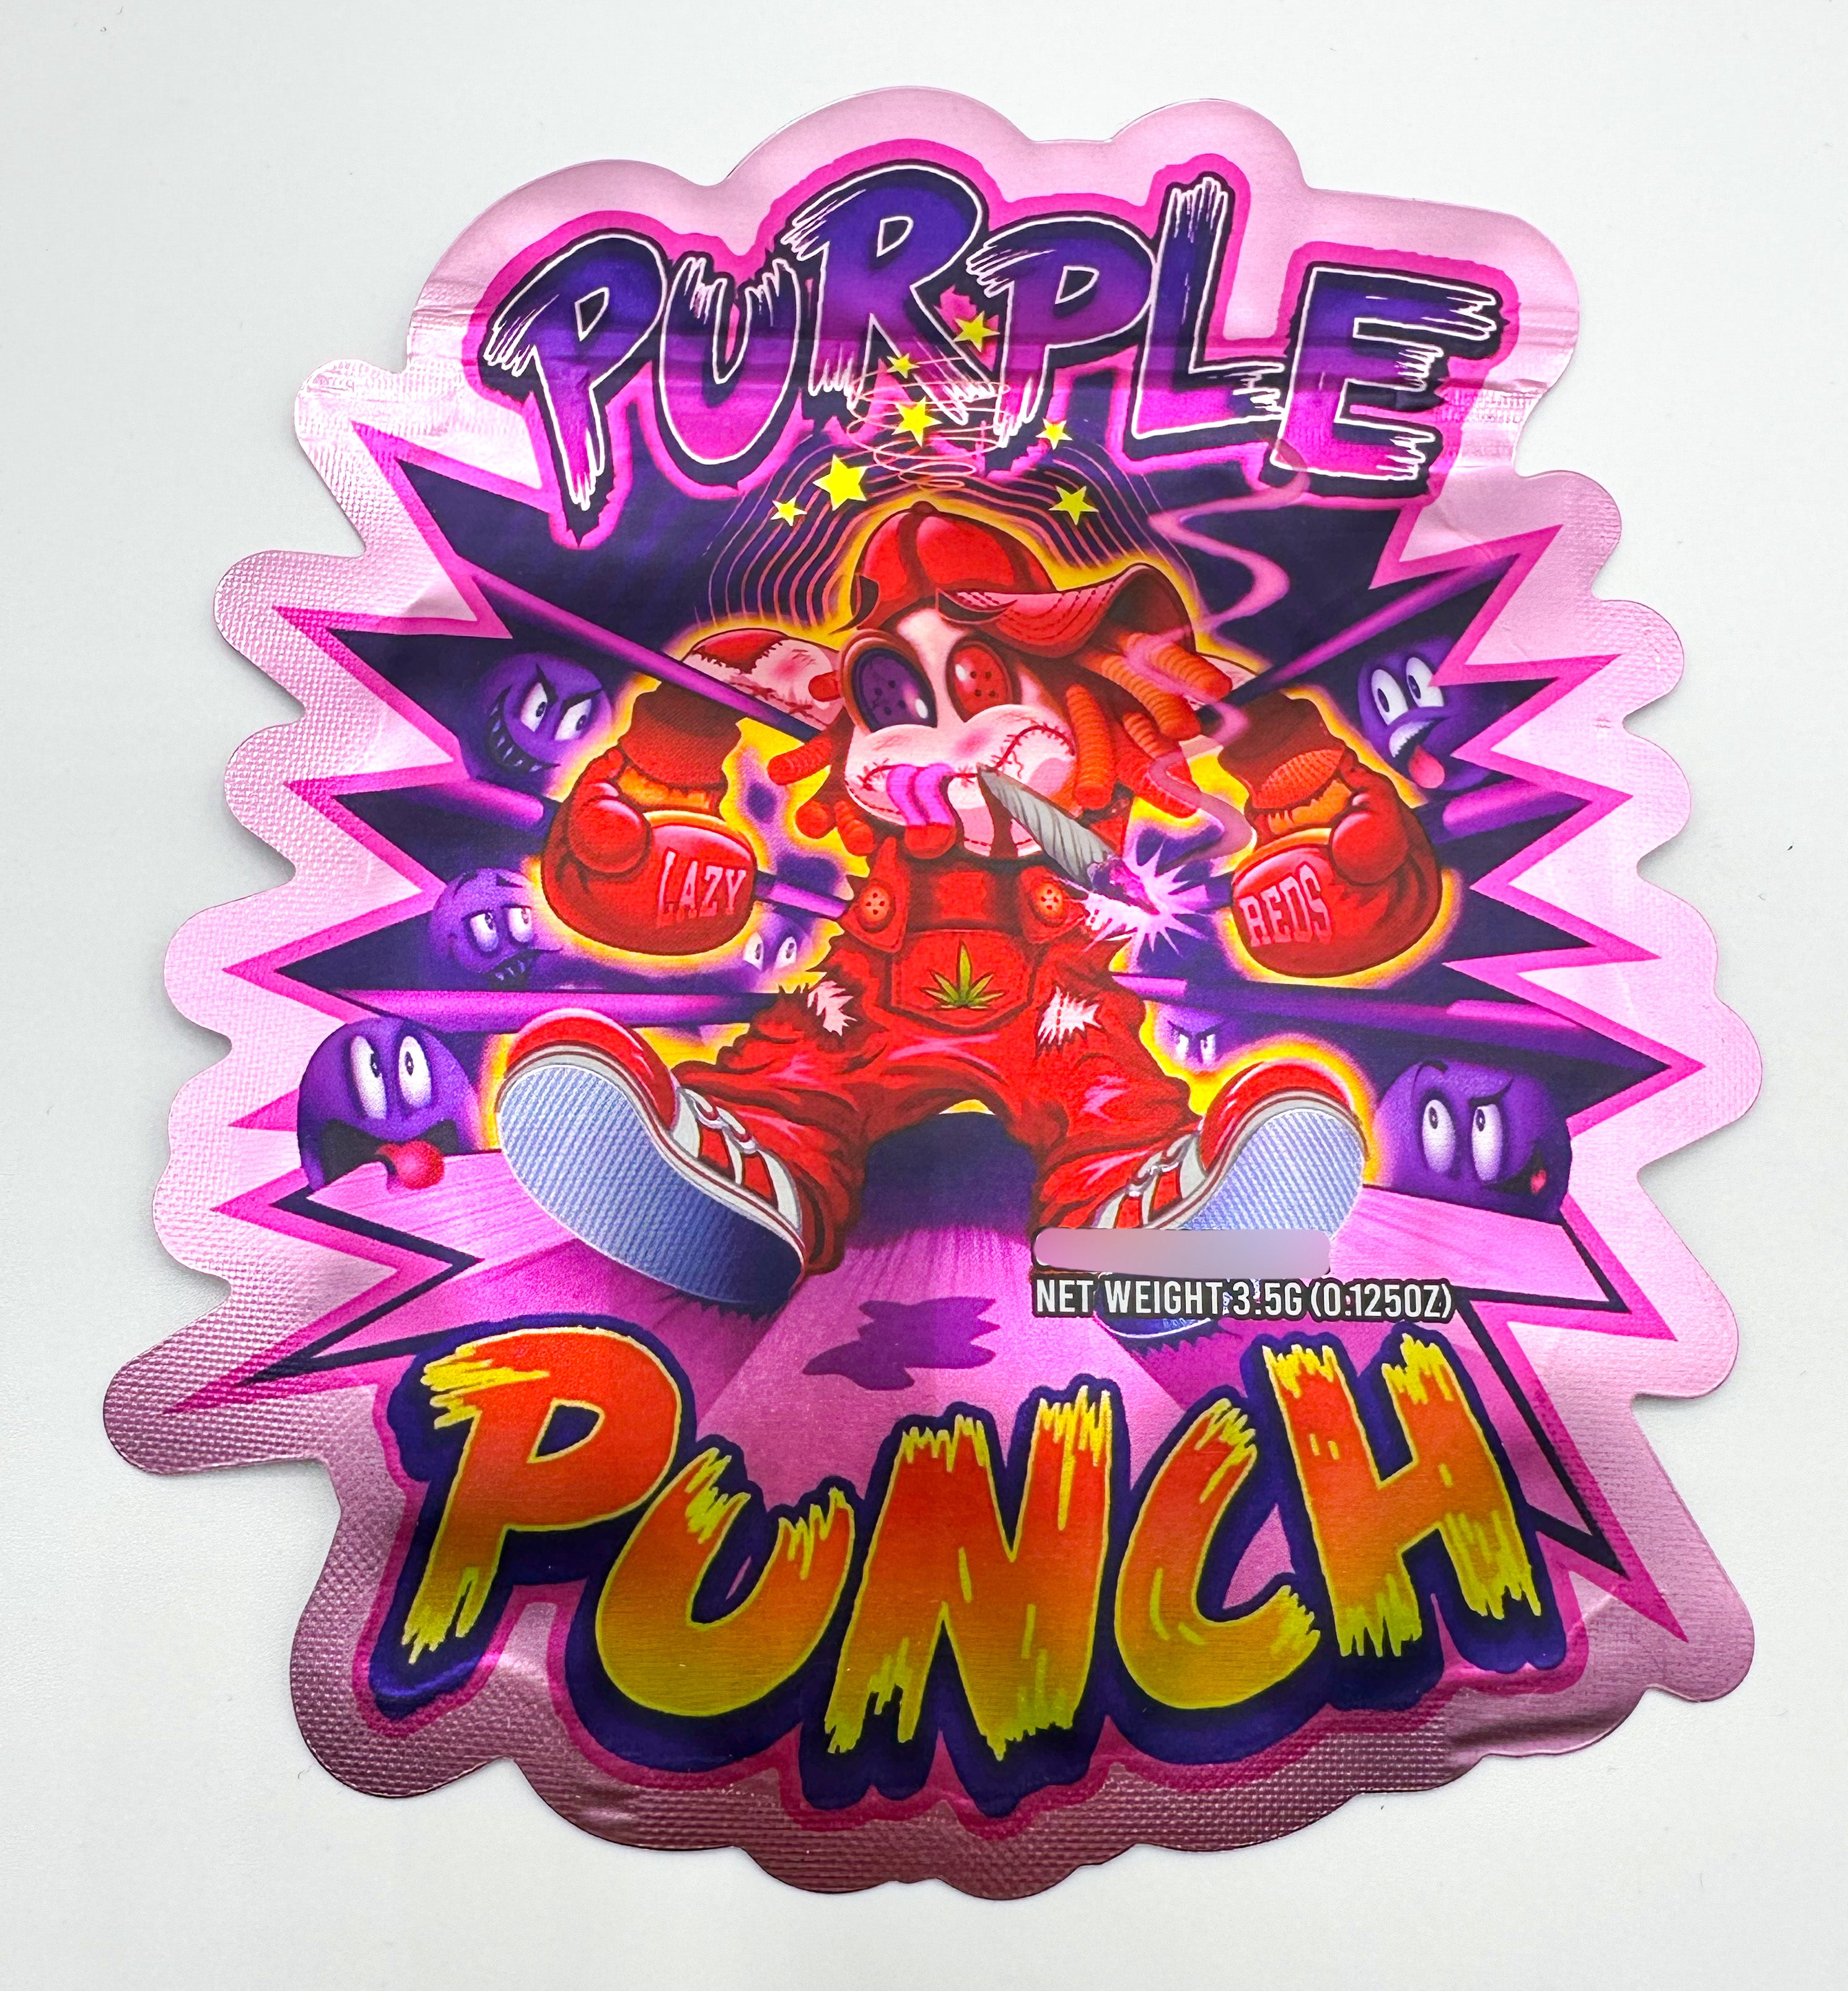 3D Purple Punch 3.5g Mylar bags